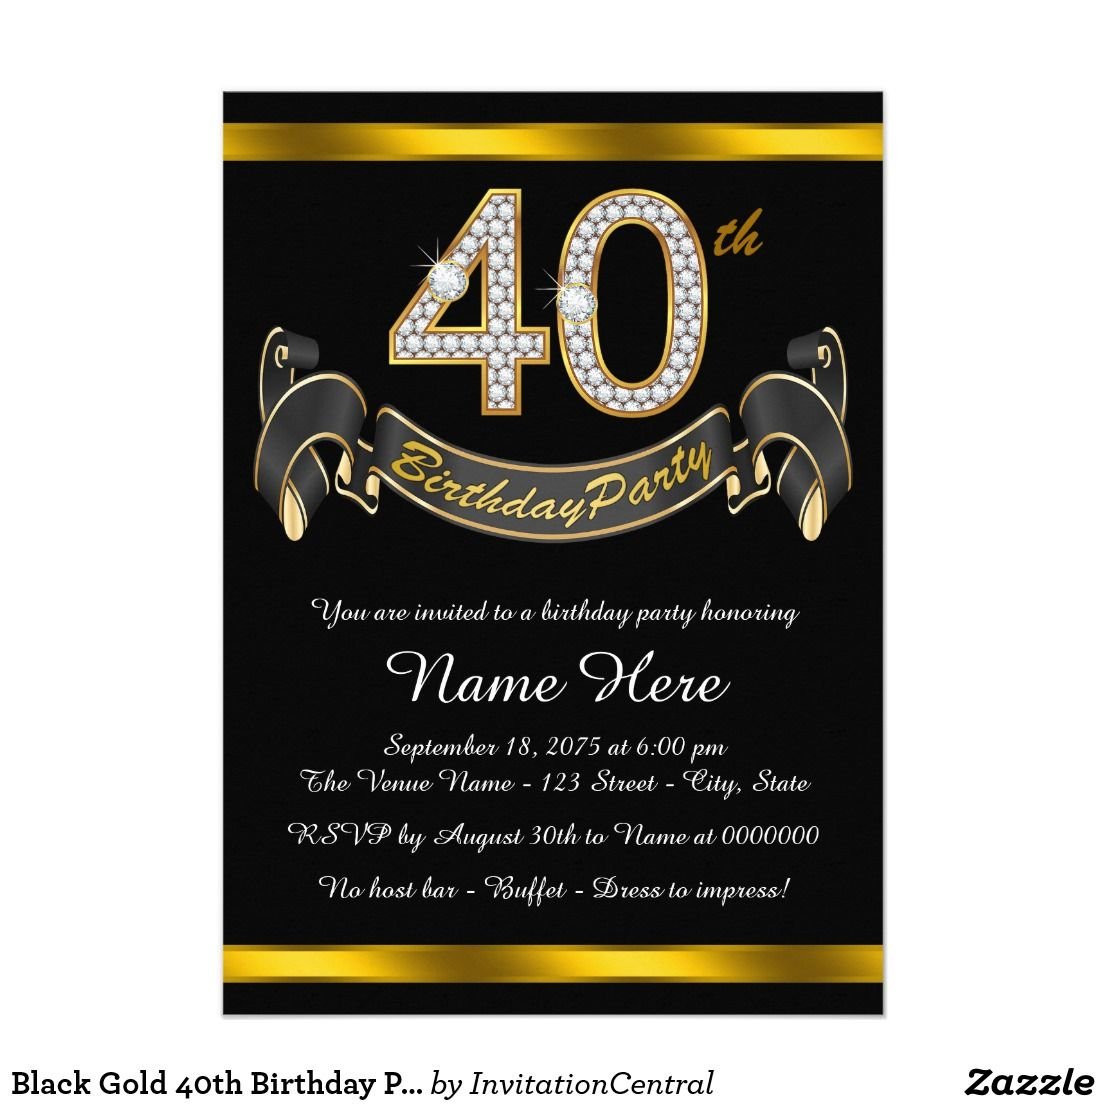 Black Gold 40th Birthday Party Invitation In 2018